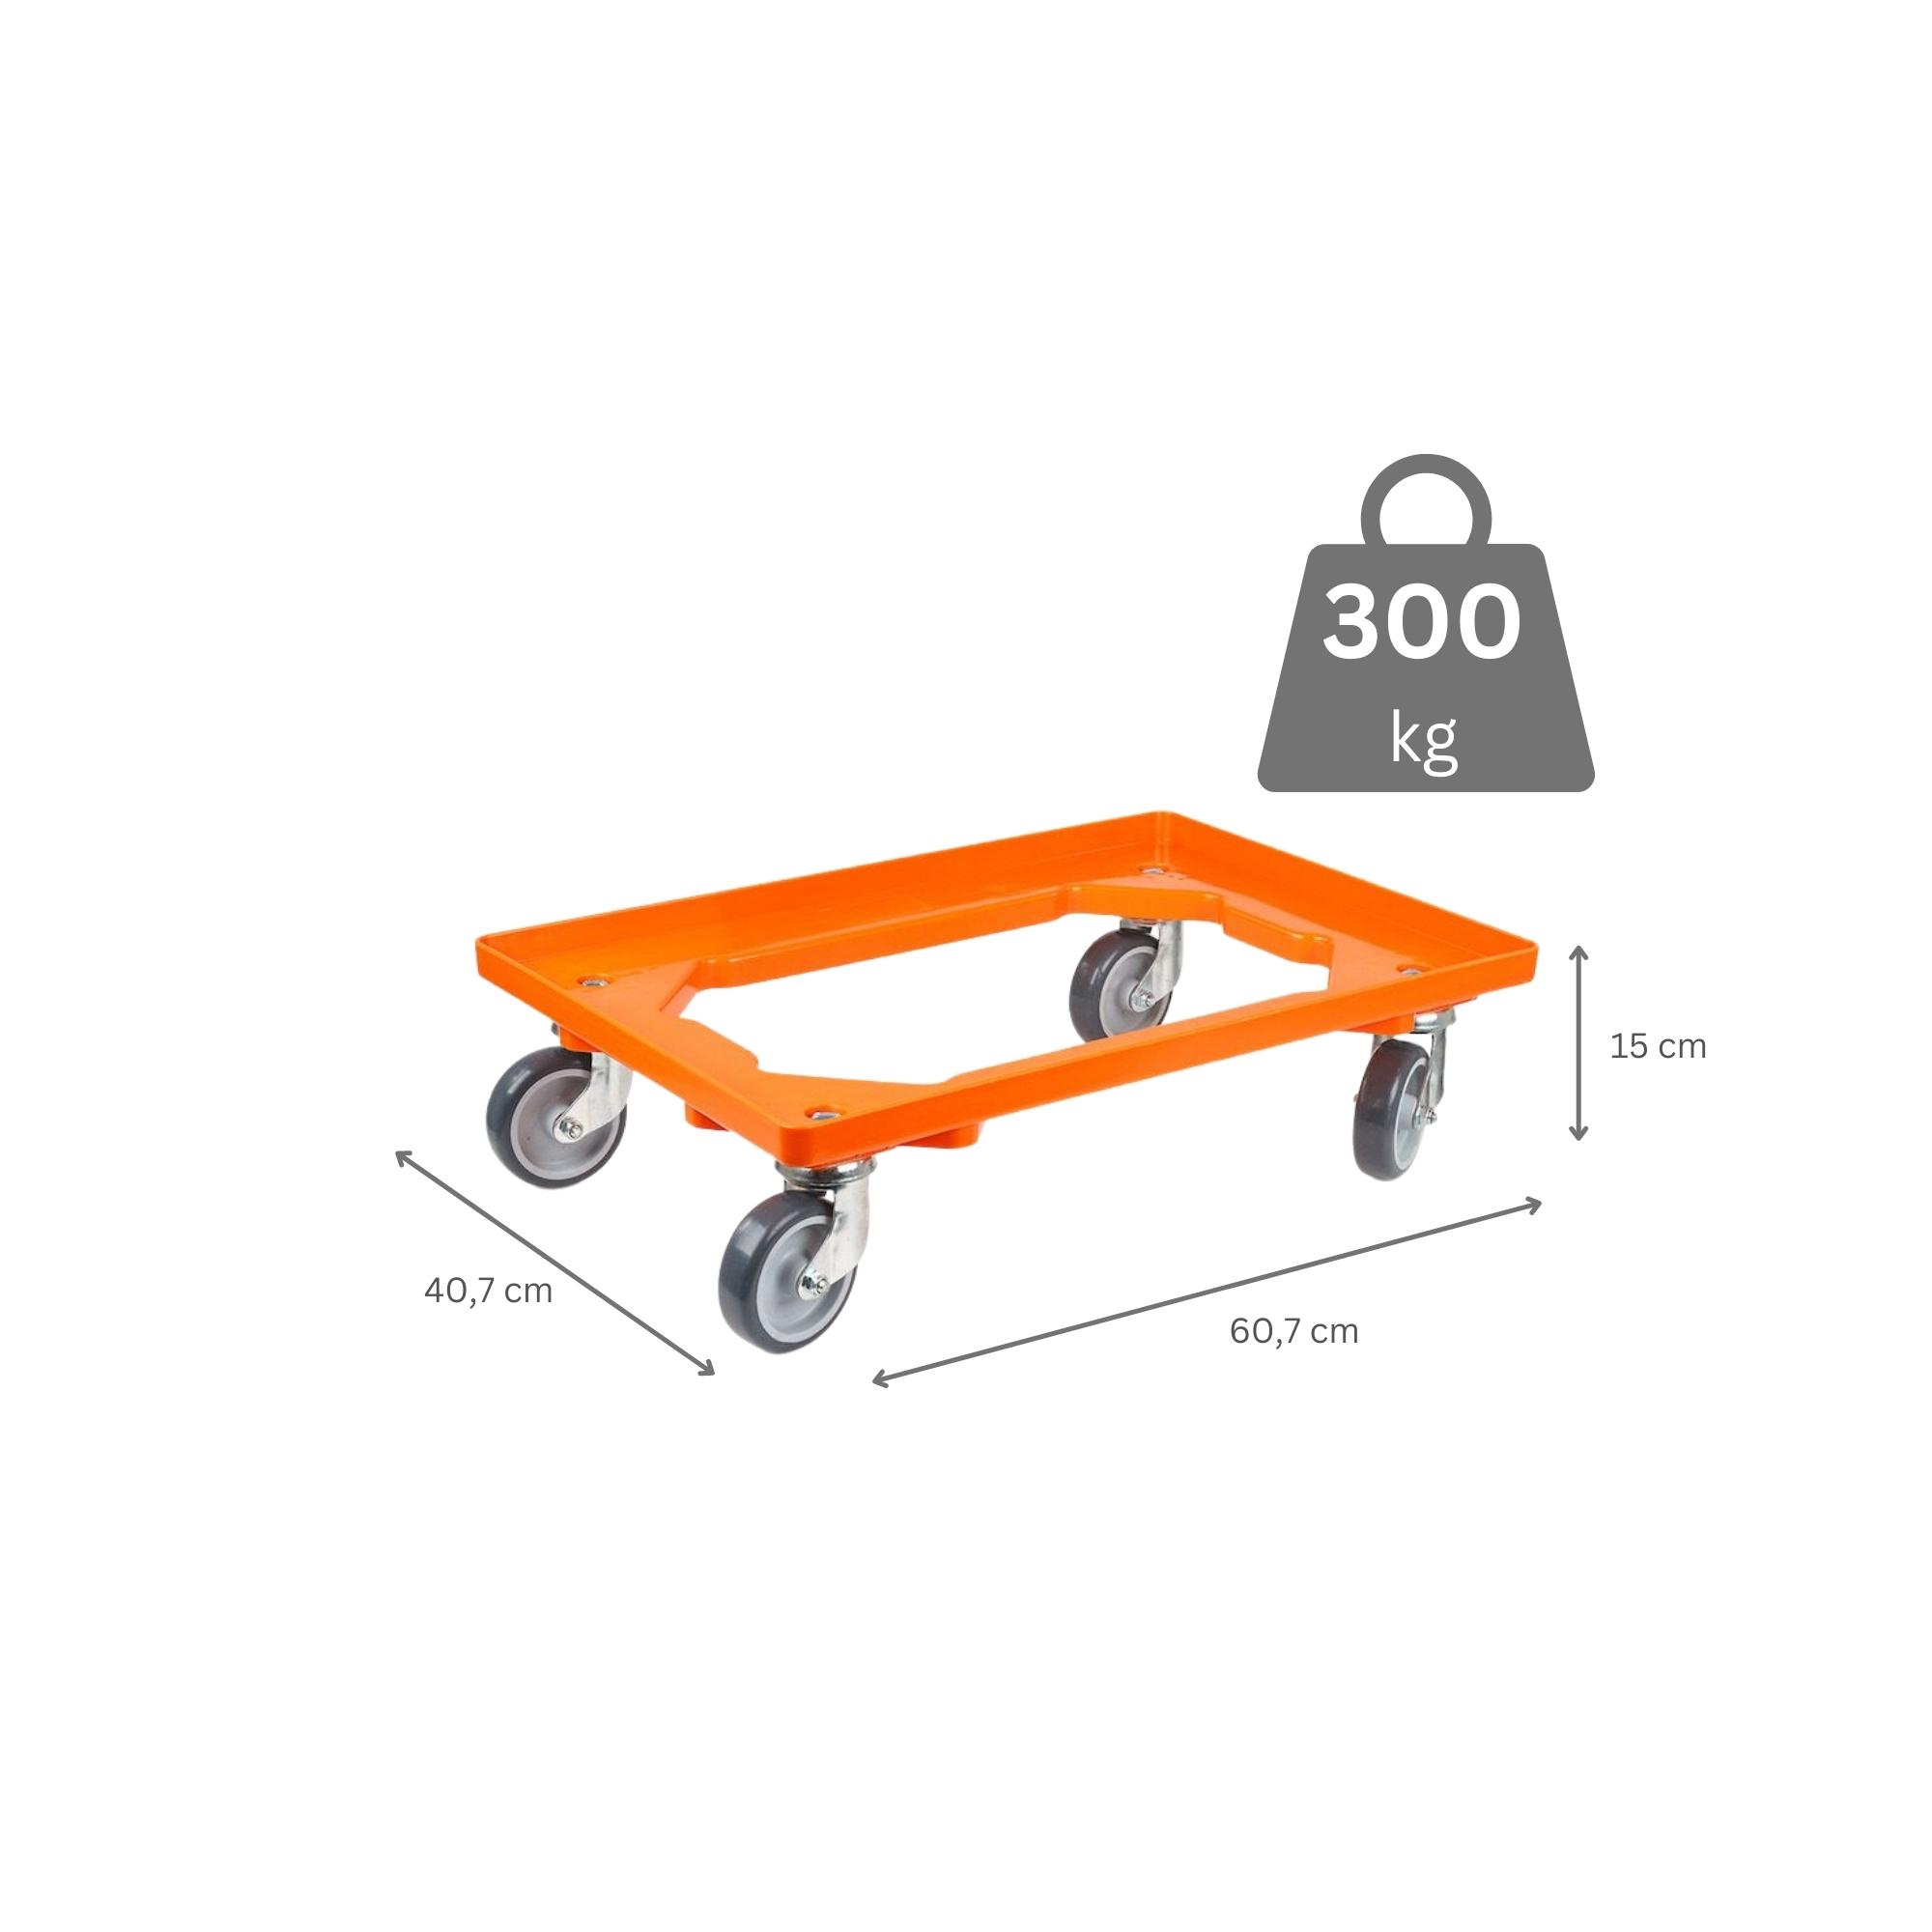 Transportroller für Euroboxen 60x40cm mit Gummiräder orange | Offenes Deck | 2 Lenkrollen & 2 Bremsrollen | Traglast 300kg | Kistenroller Logistikroller Rollwagen Profi-Fahrgestell